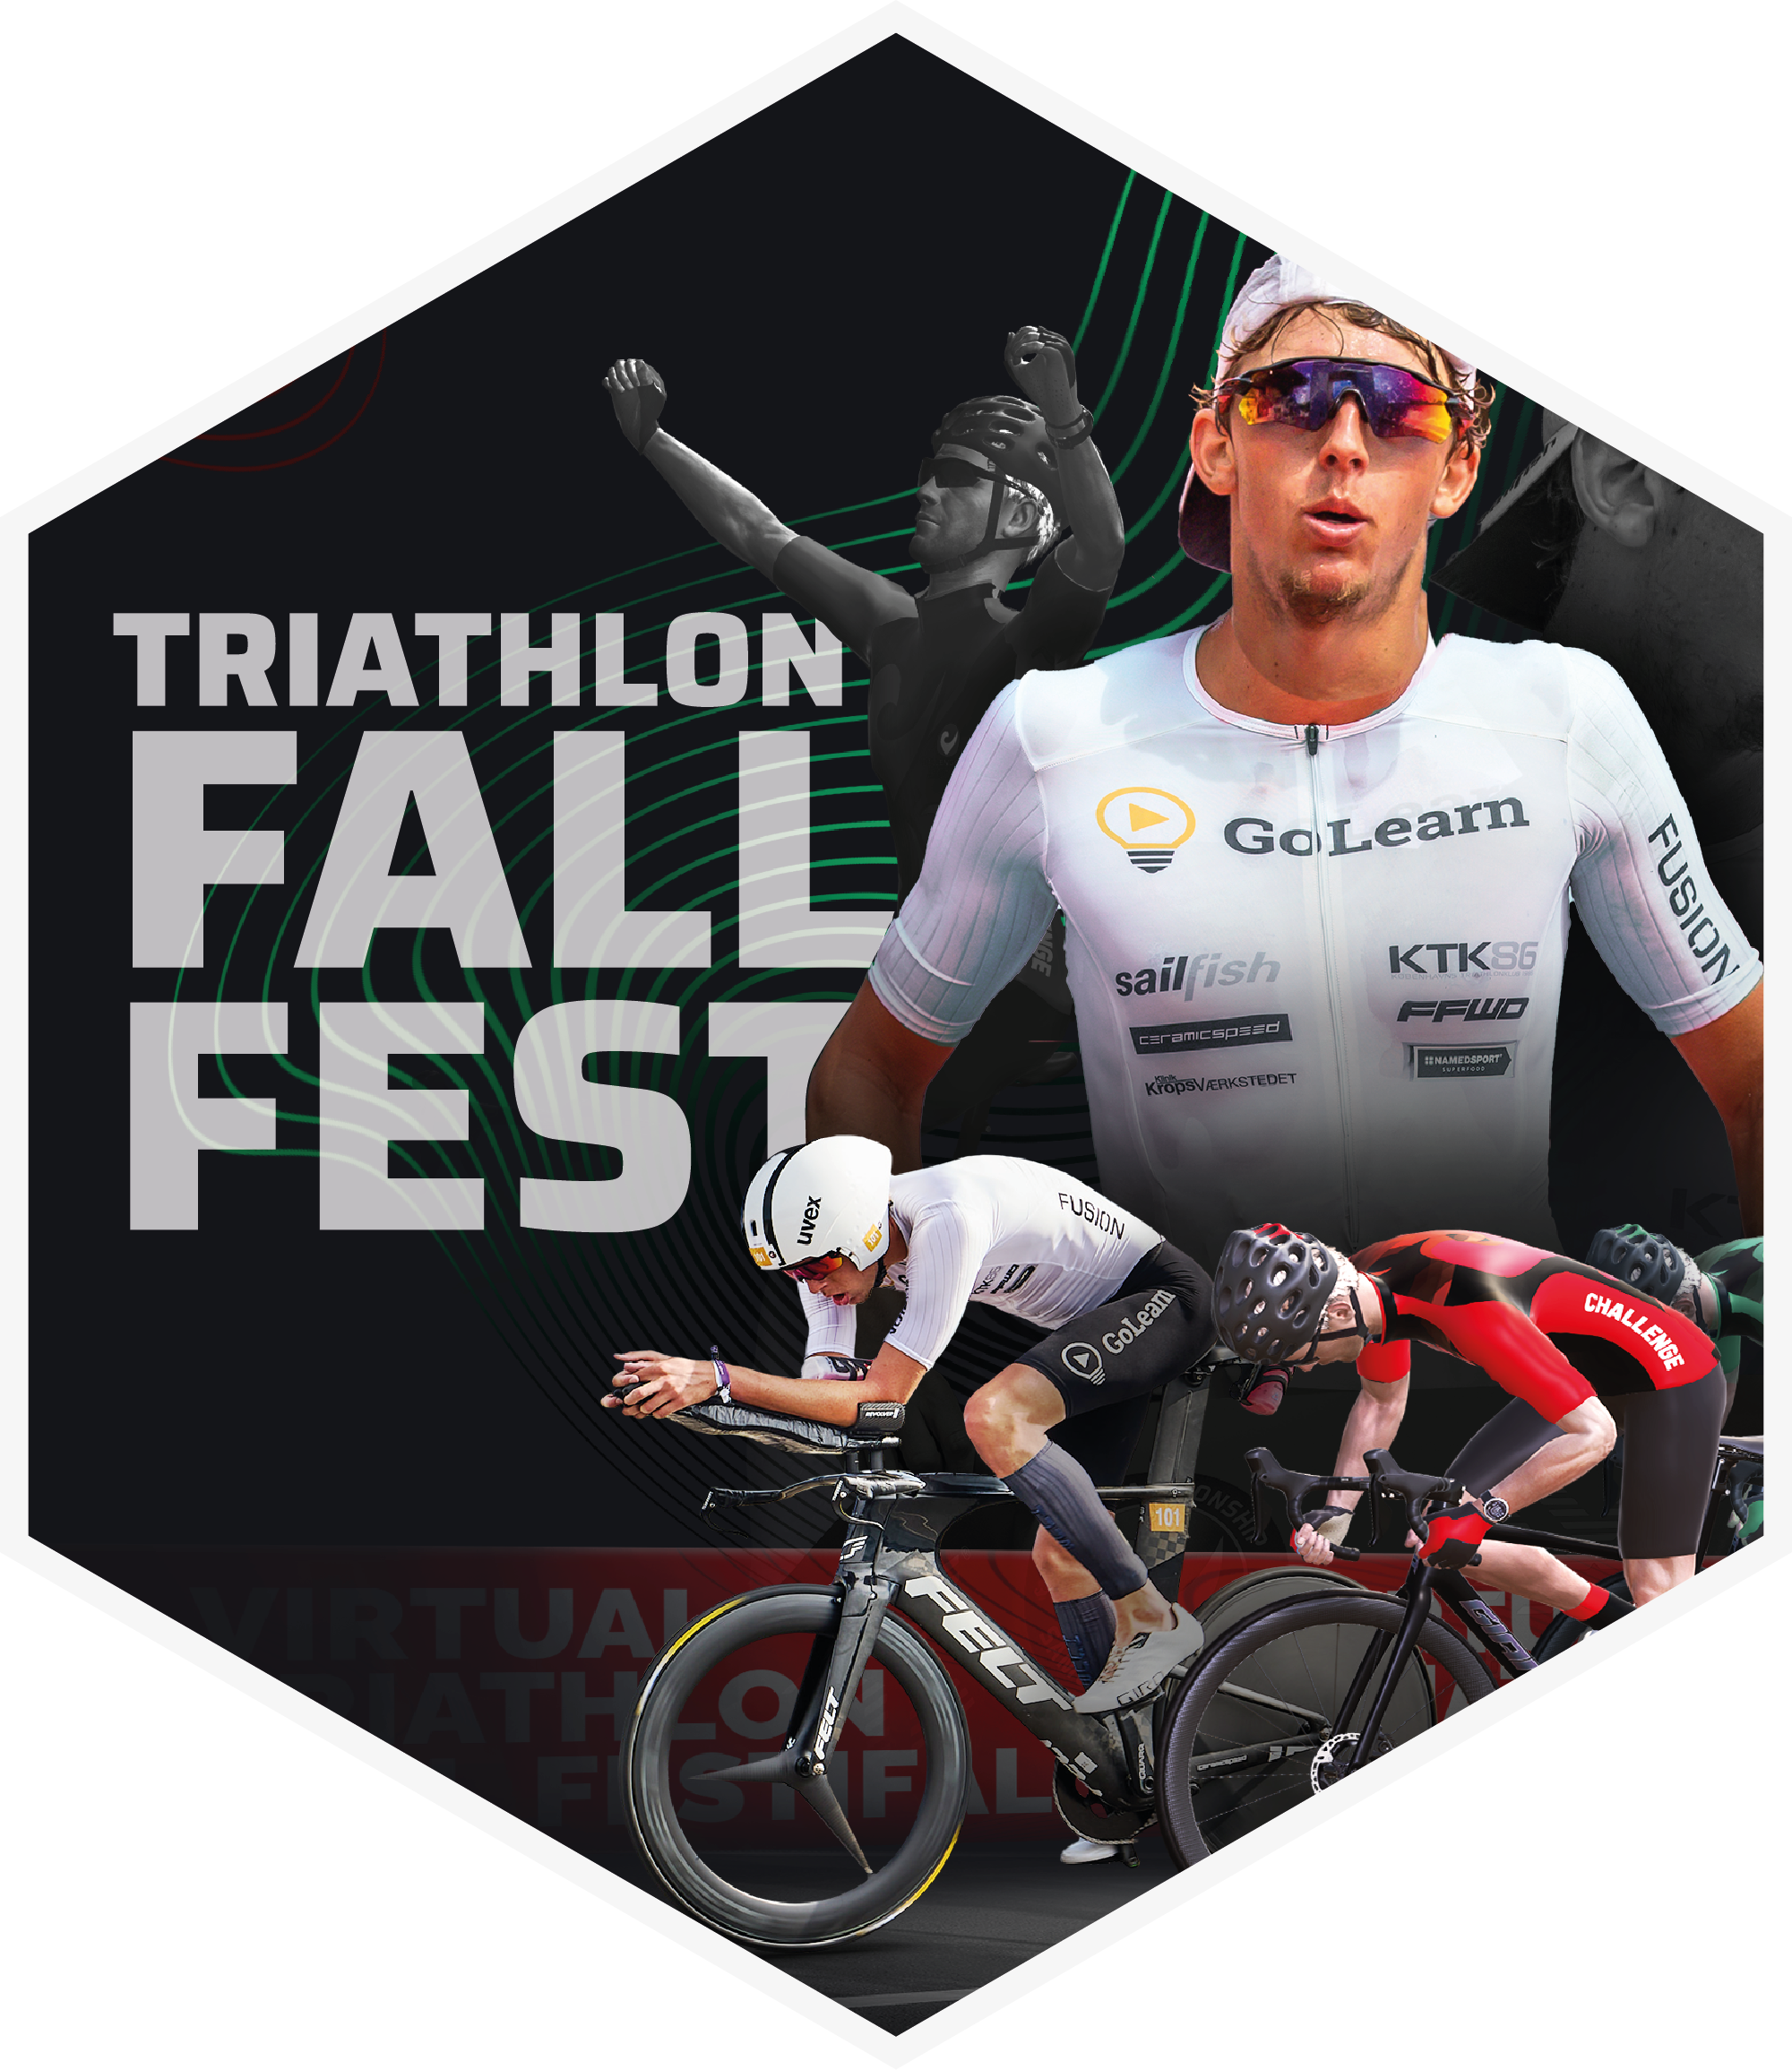 Triathlon Fall Fest Herausforderung